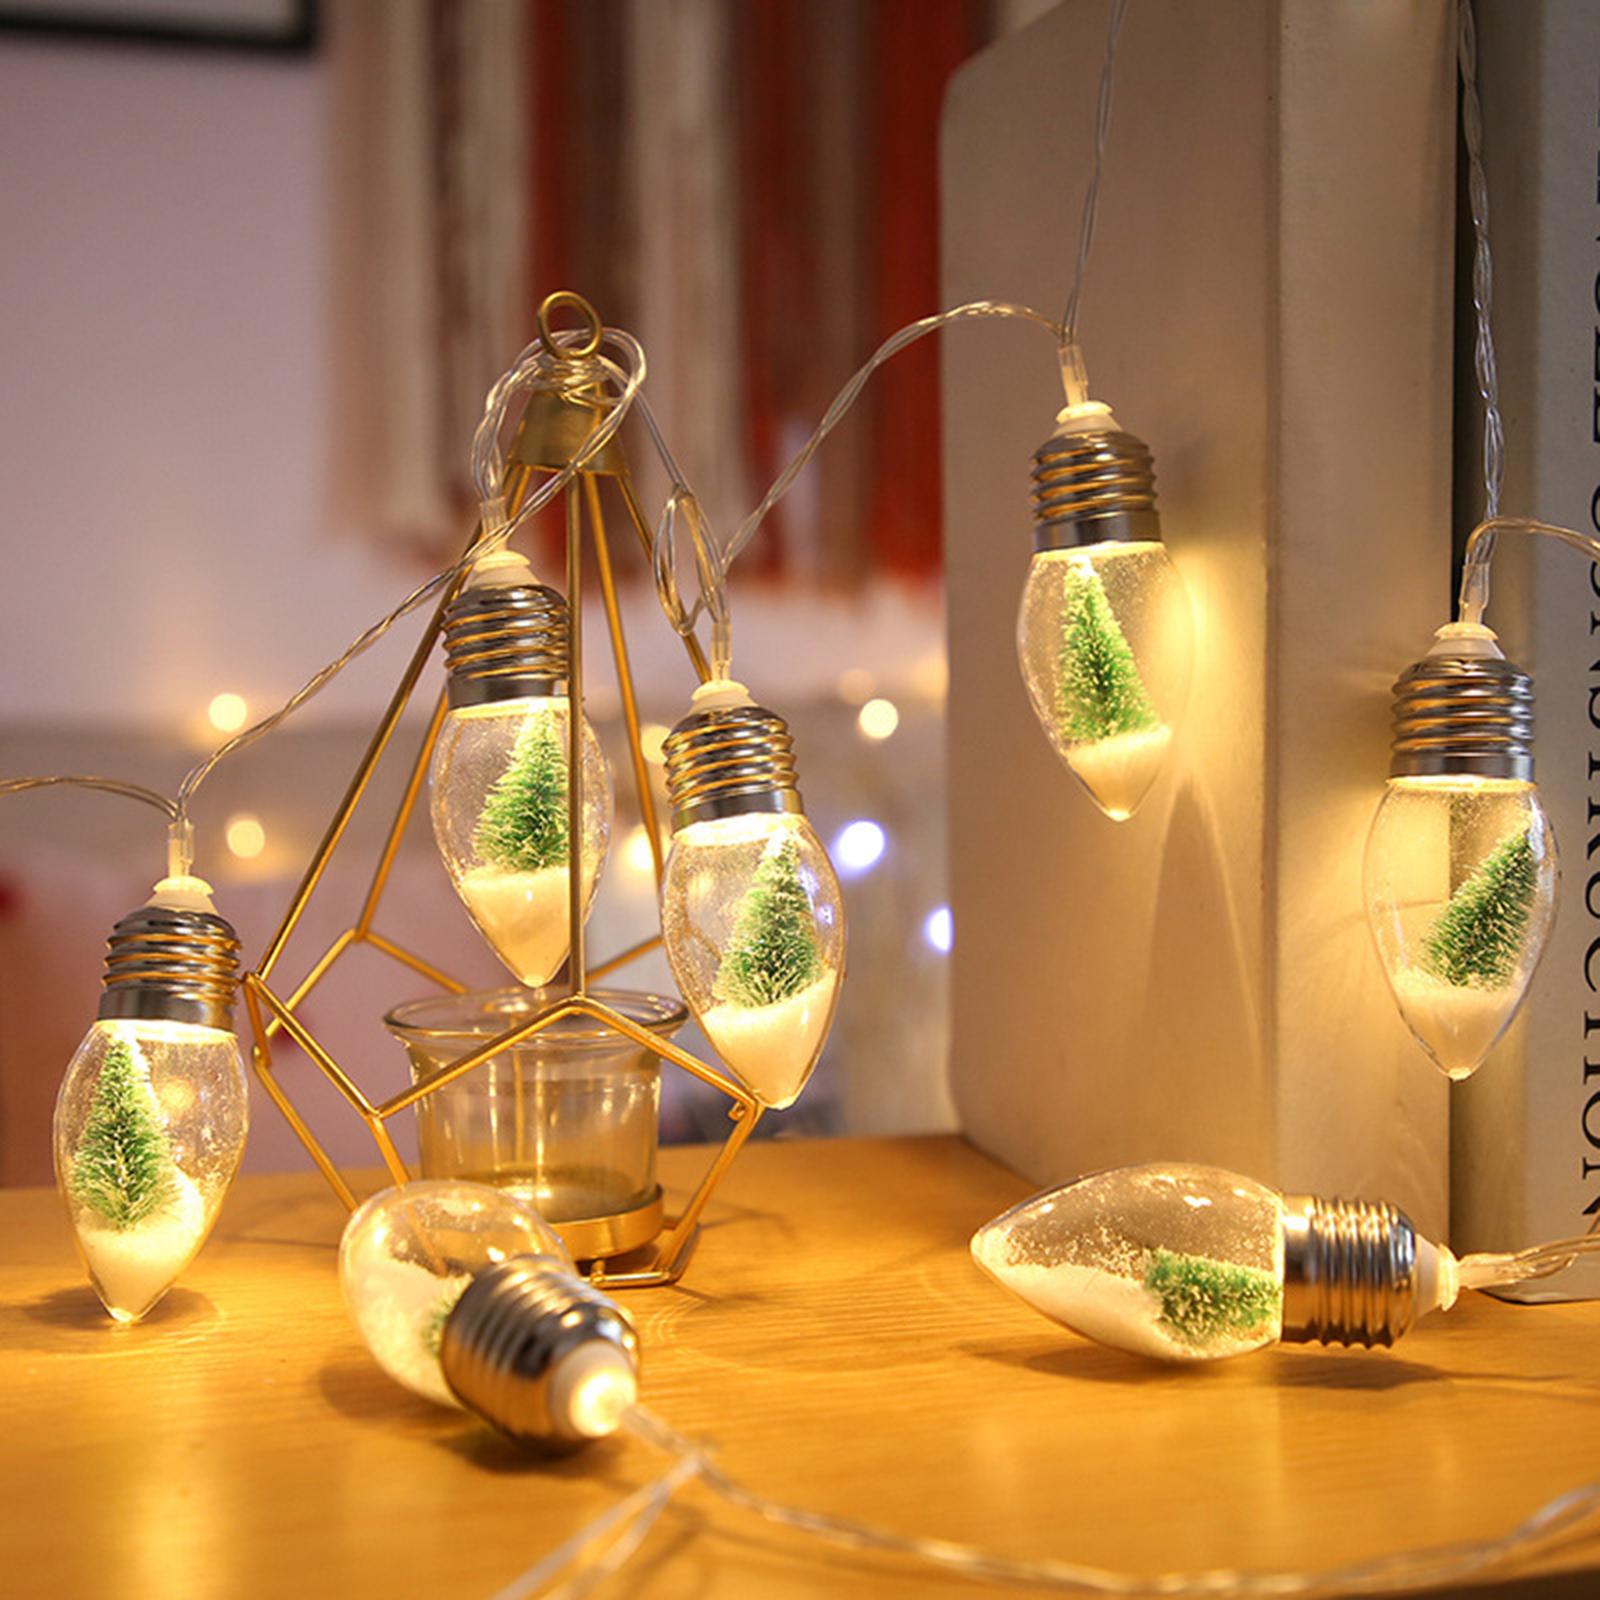 10 LED Wine Bottle Light String Fairy Wire Night Light for Home Wedding 1.5m